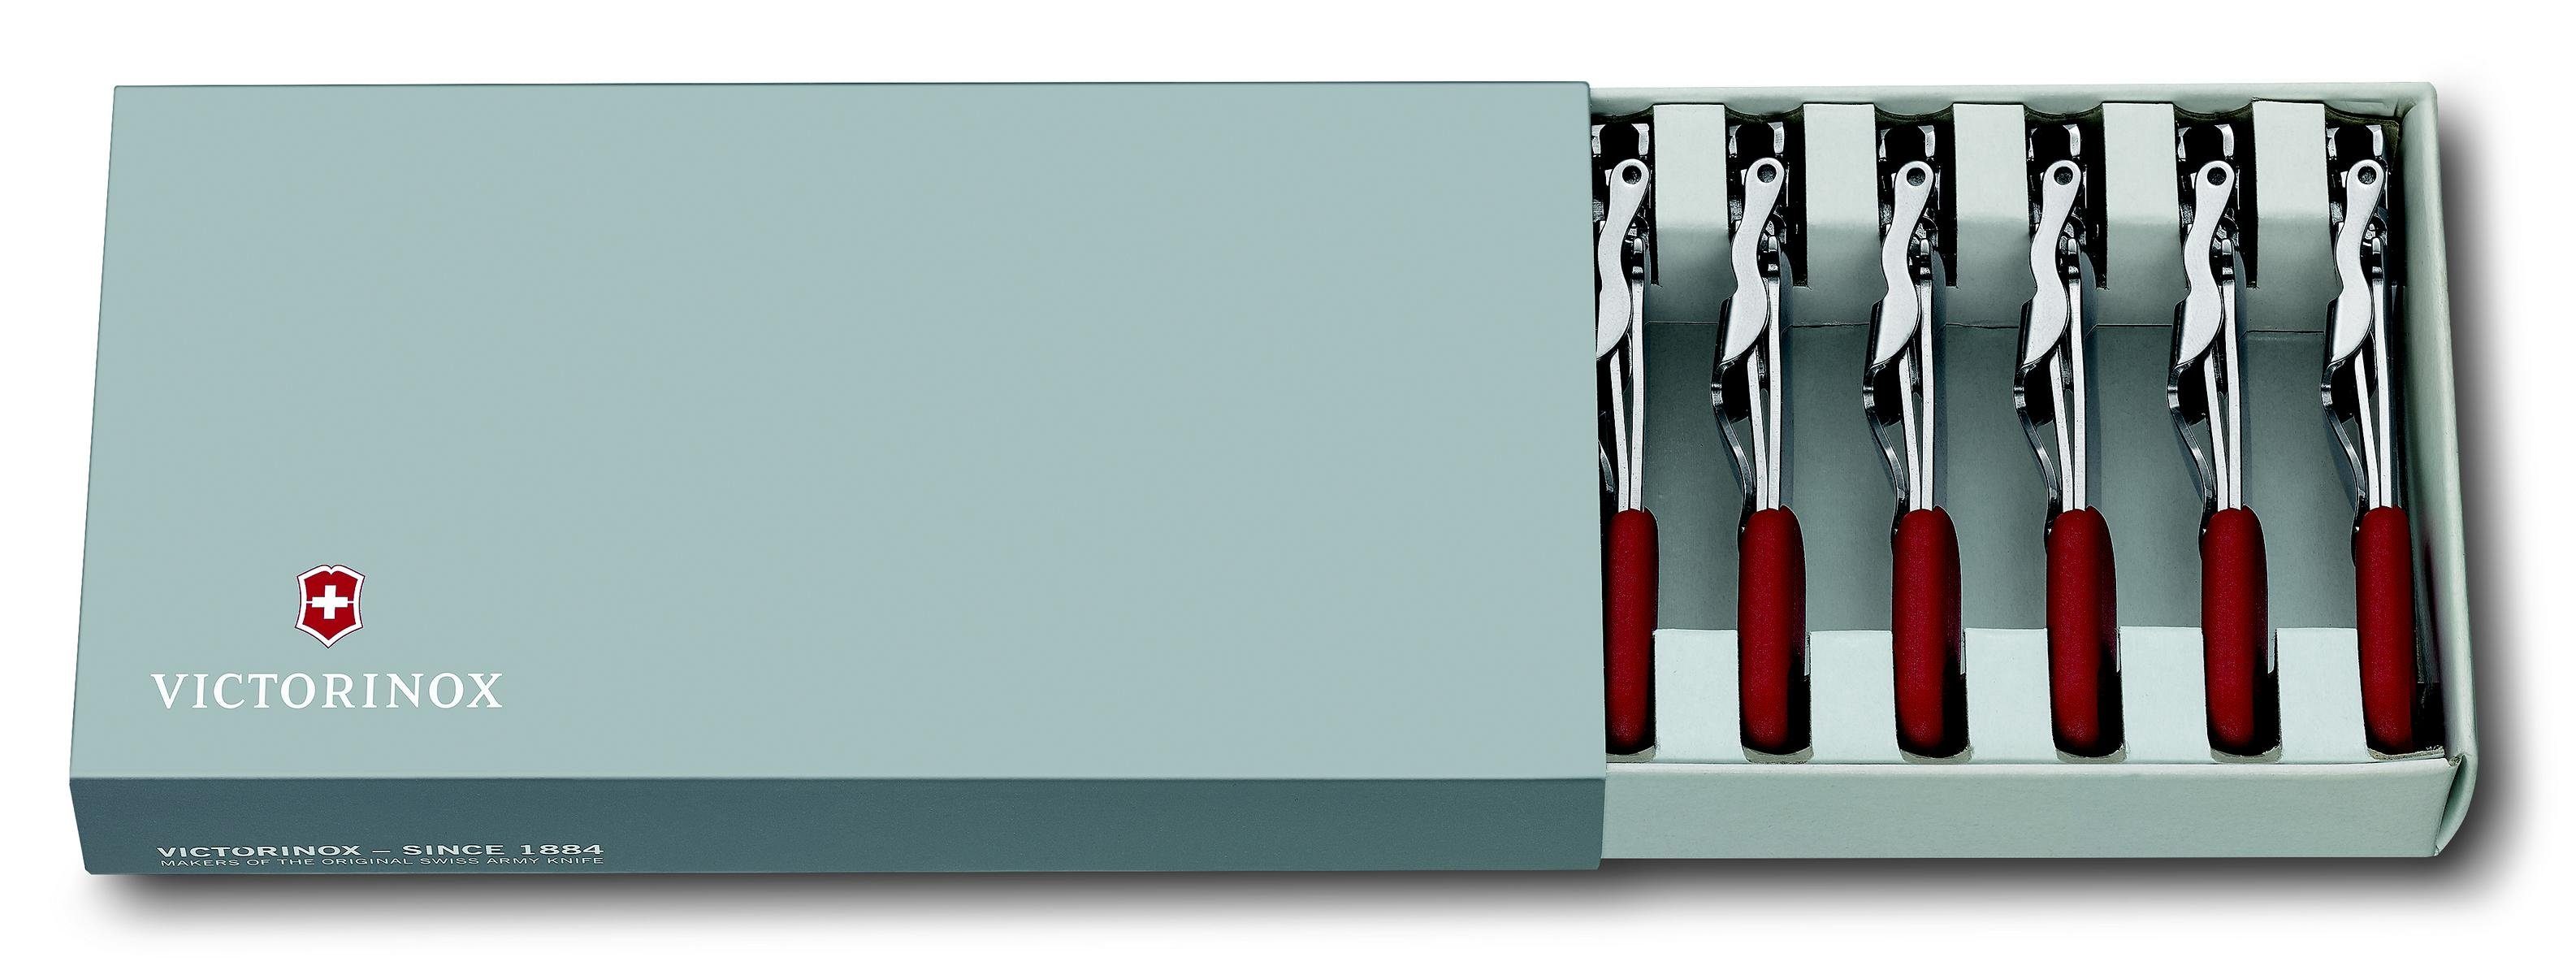 Victorinox Taschenmesser 10 Stk., rot Clipper Nail Set